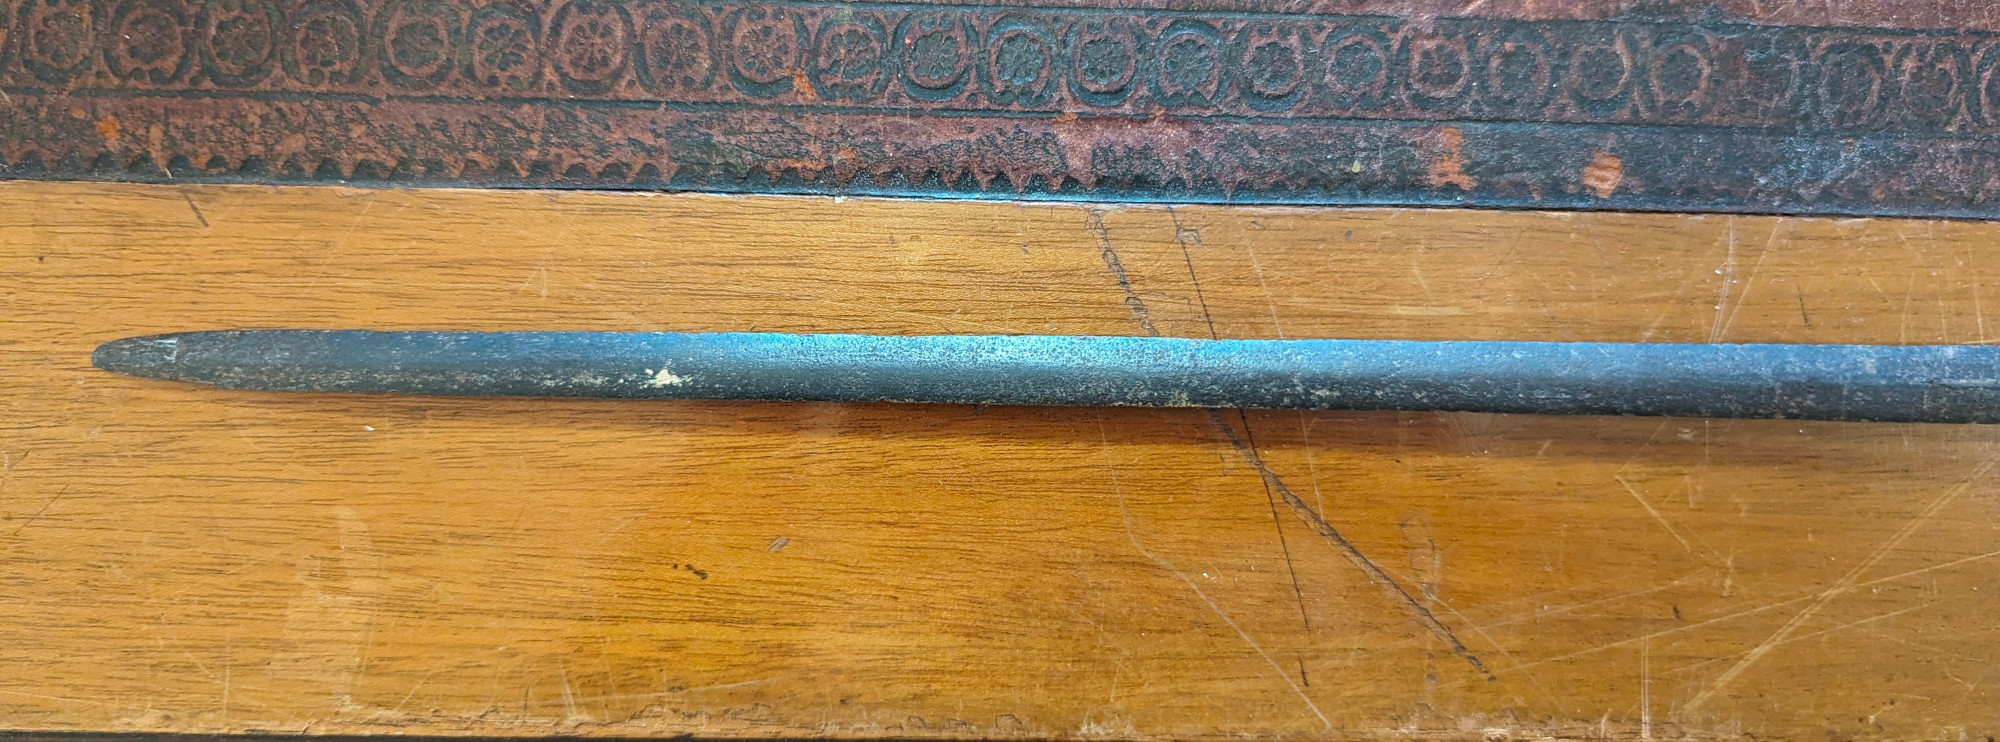 A Vintage decorative dress sword - Image 6 of 8